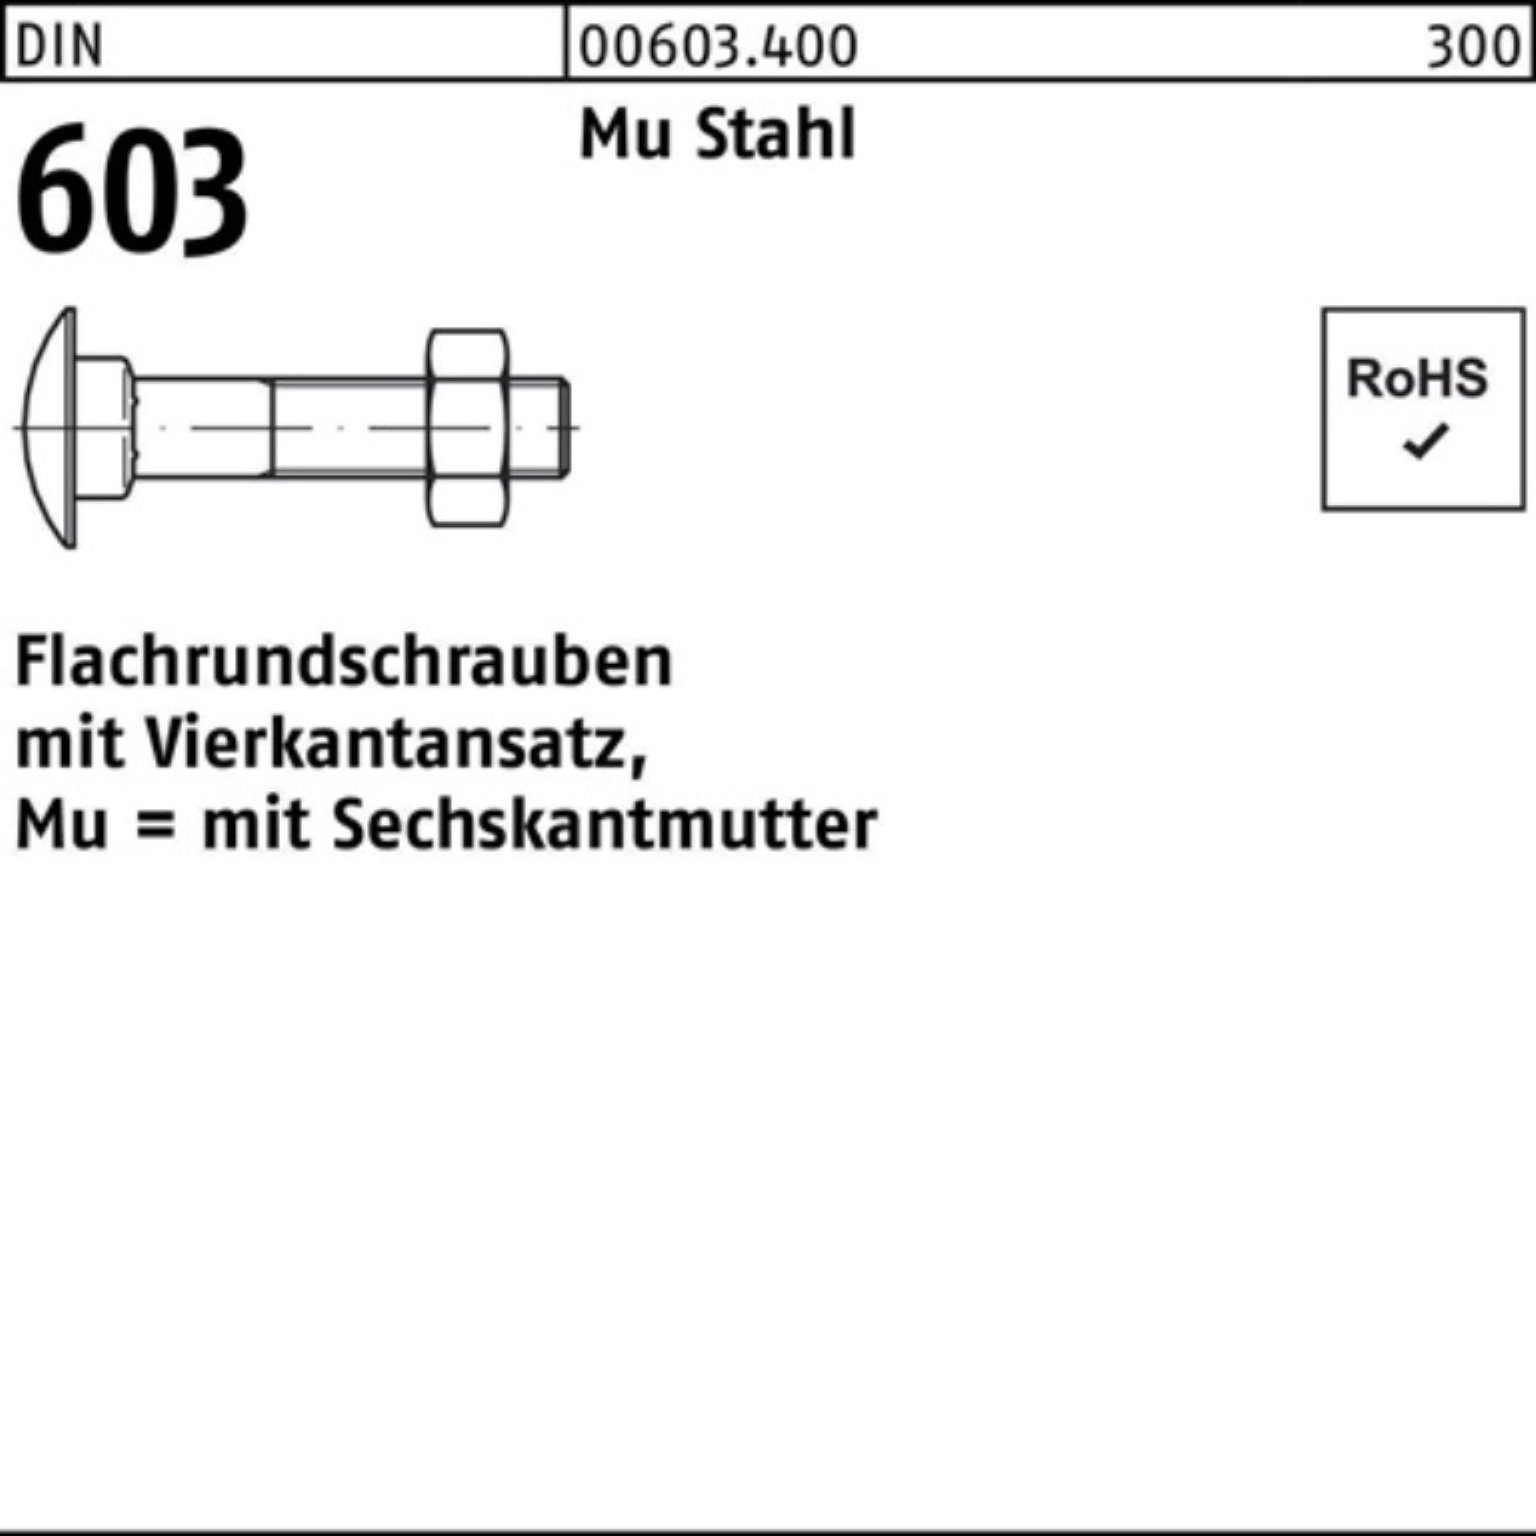 603 Vierkantansatz/6-ktmutter Reyher Flachrundschraube Pack 100er Schraube M12x35 DIN